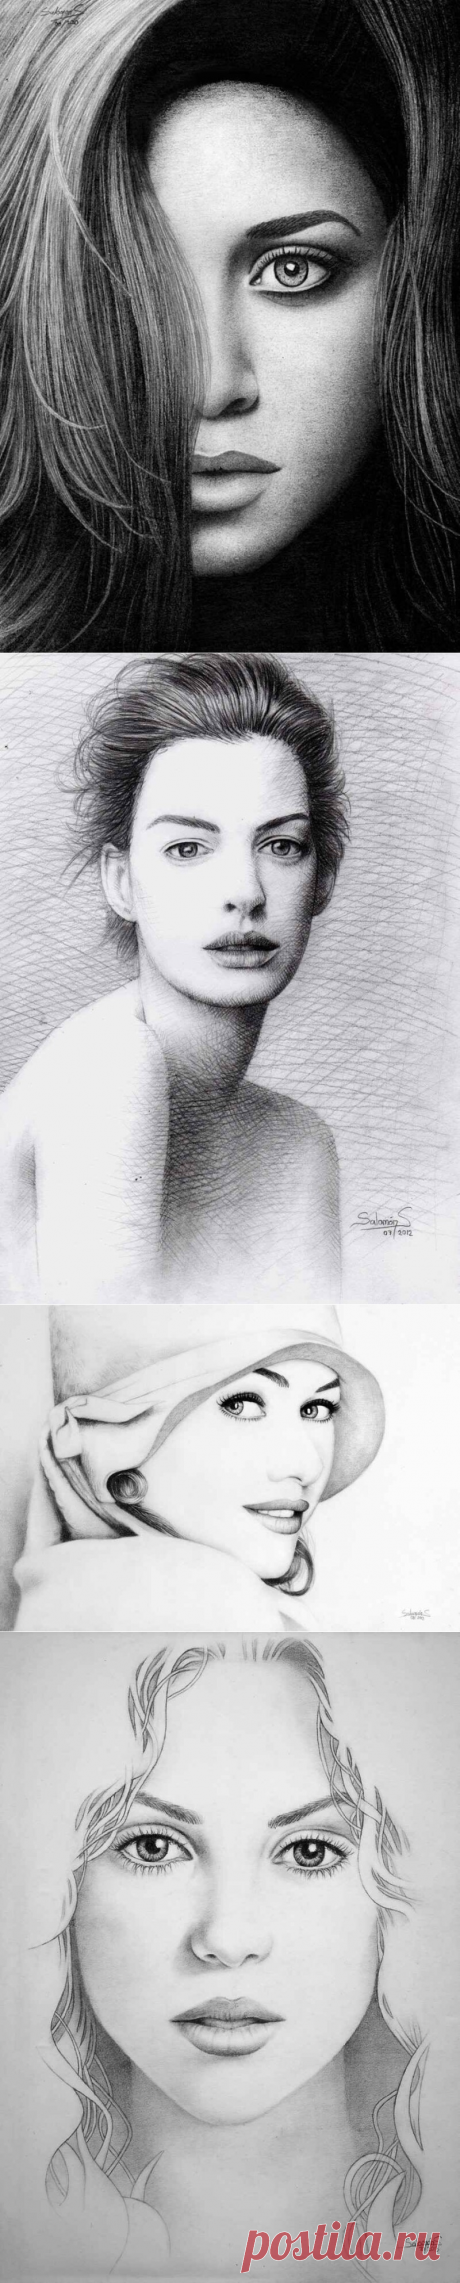 Портреты карандашом. Salomon Sarmiento